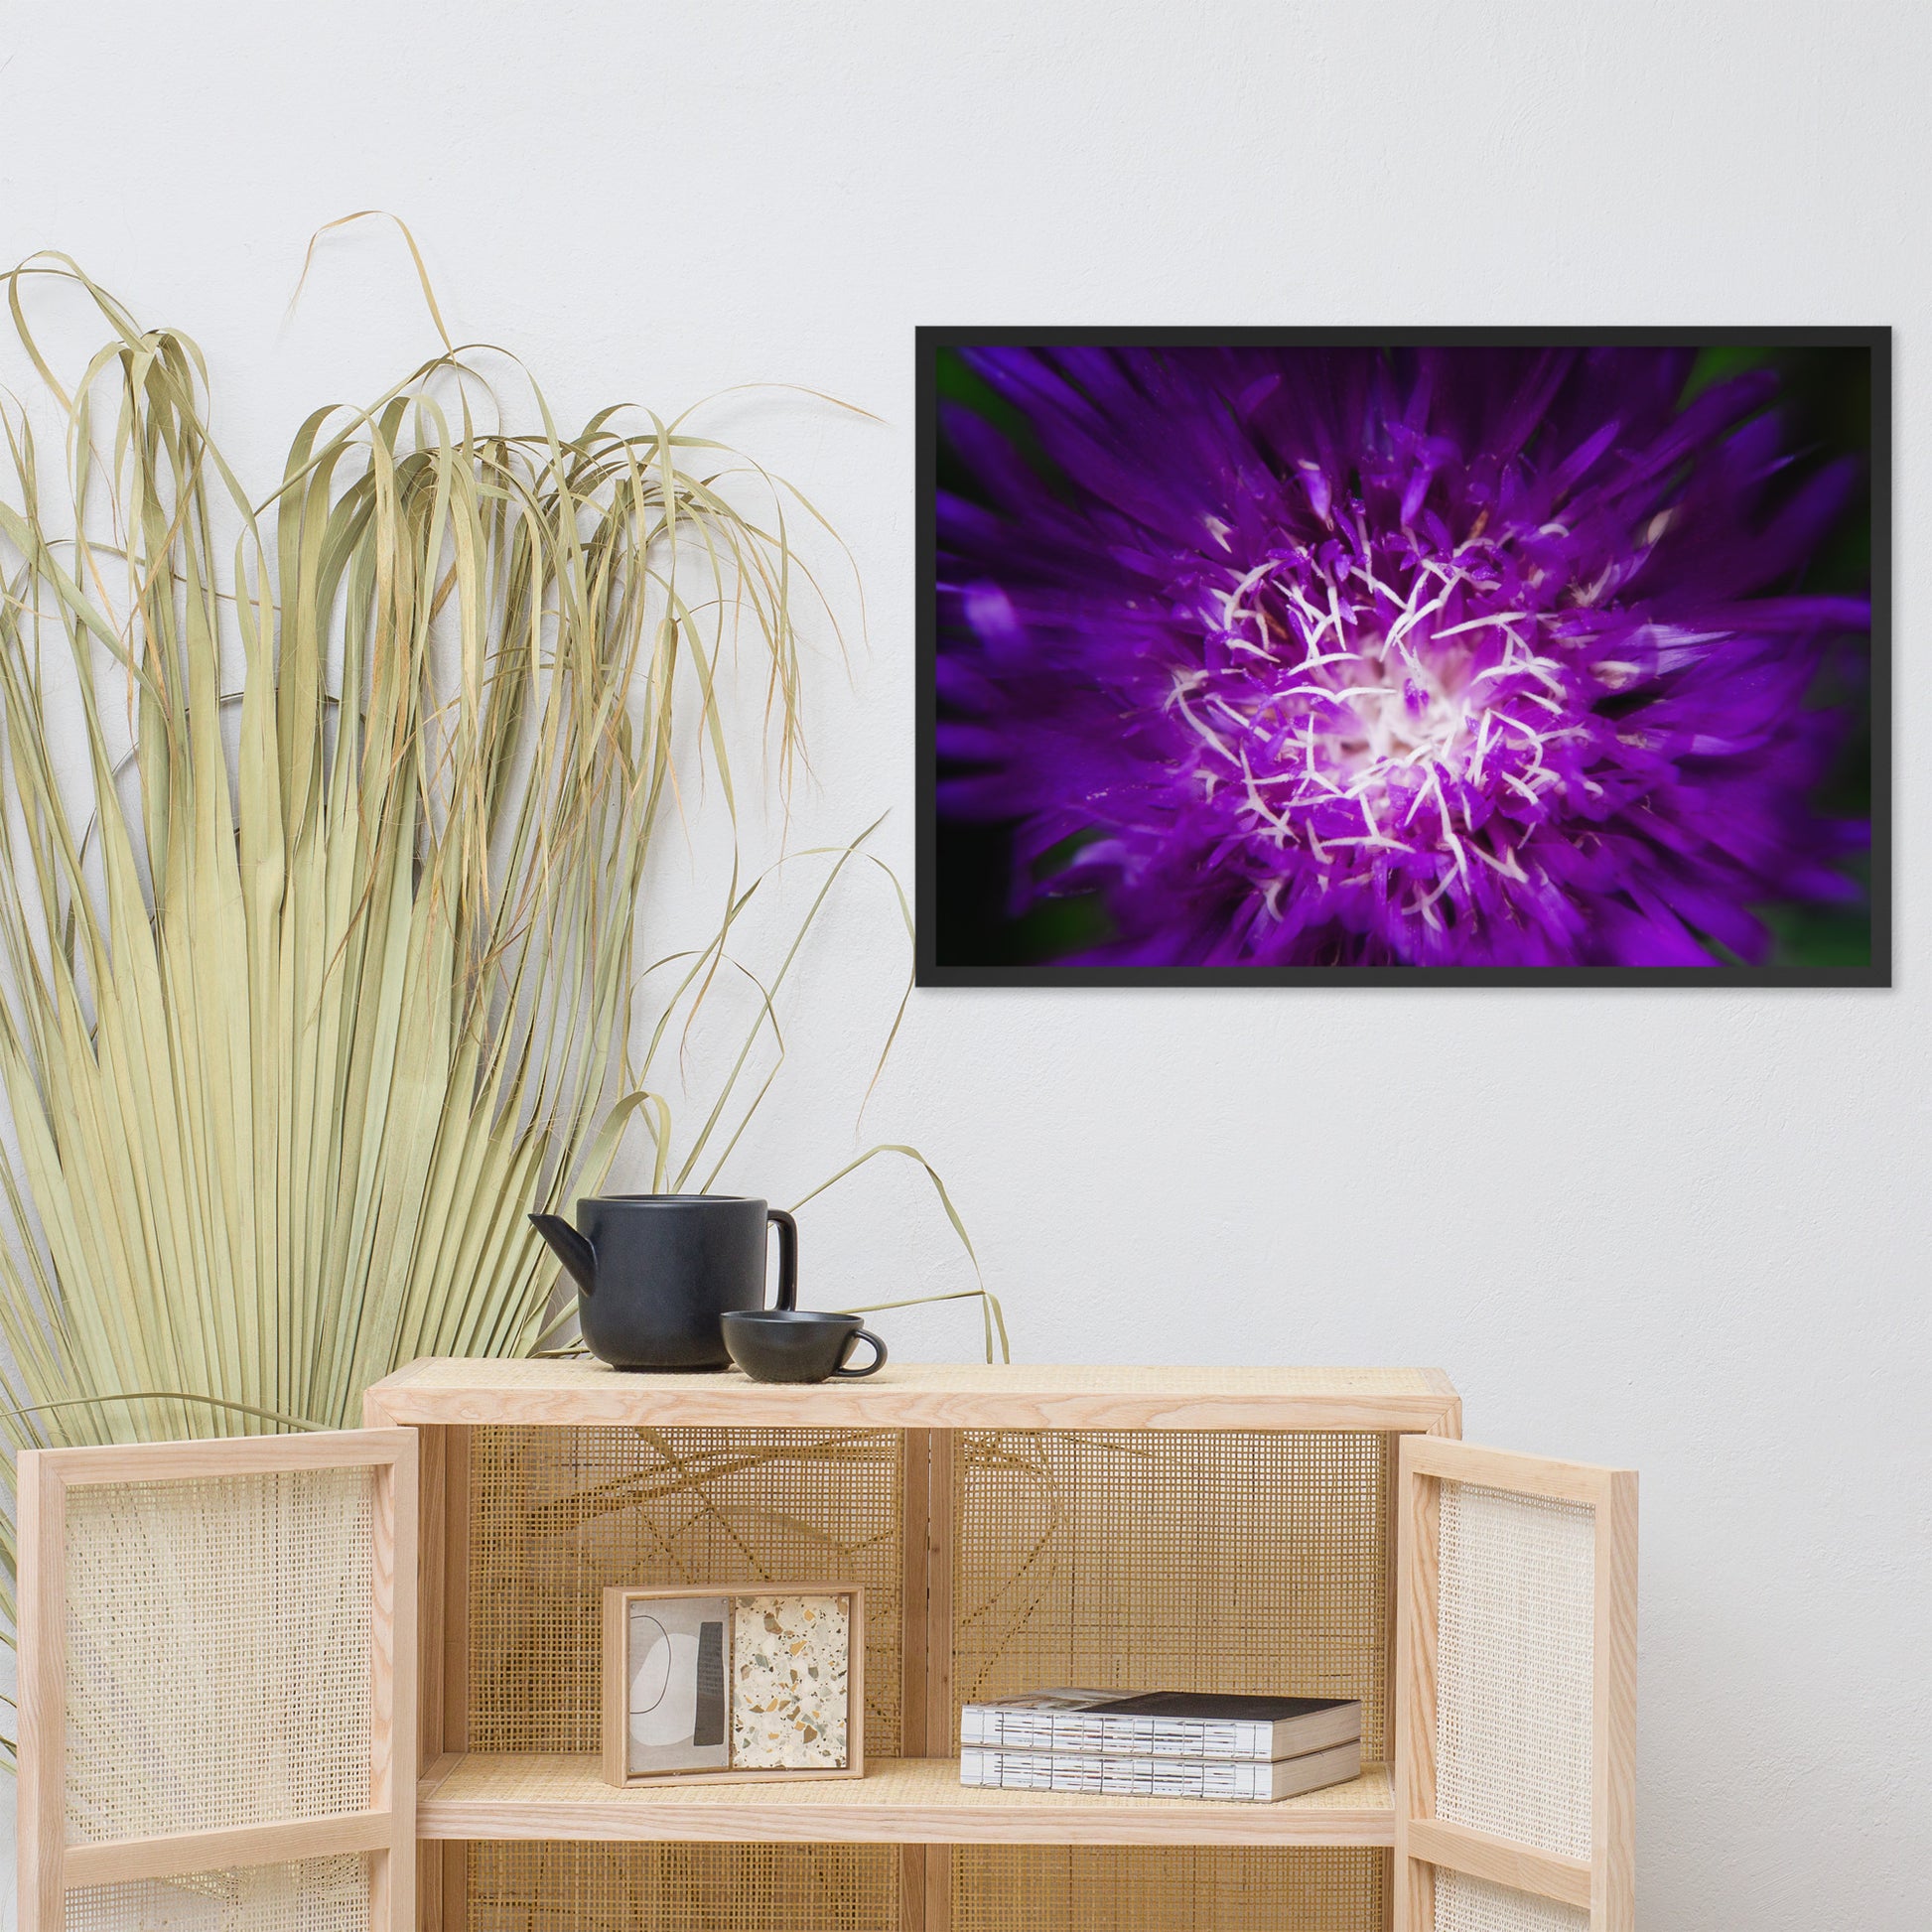 Minimalist Living Room Art: Purple Abstract Flower - Botanical / Floral / Flora / Flowers / Nature Photograph Framed Wall Art Print - Artwork - Wall Decor